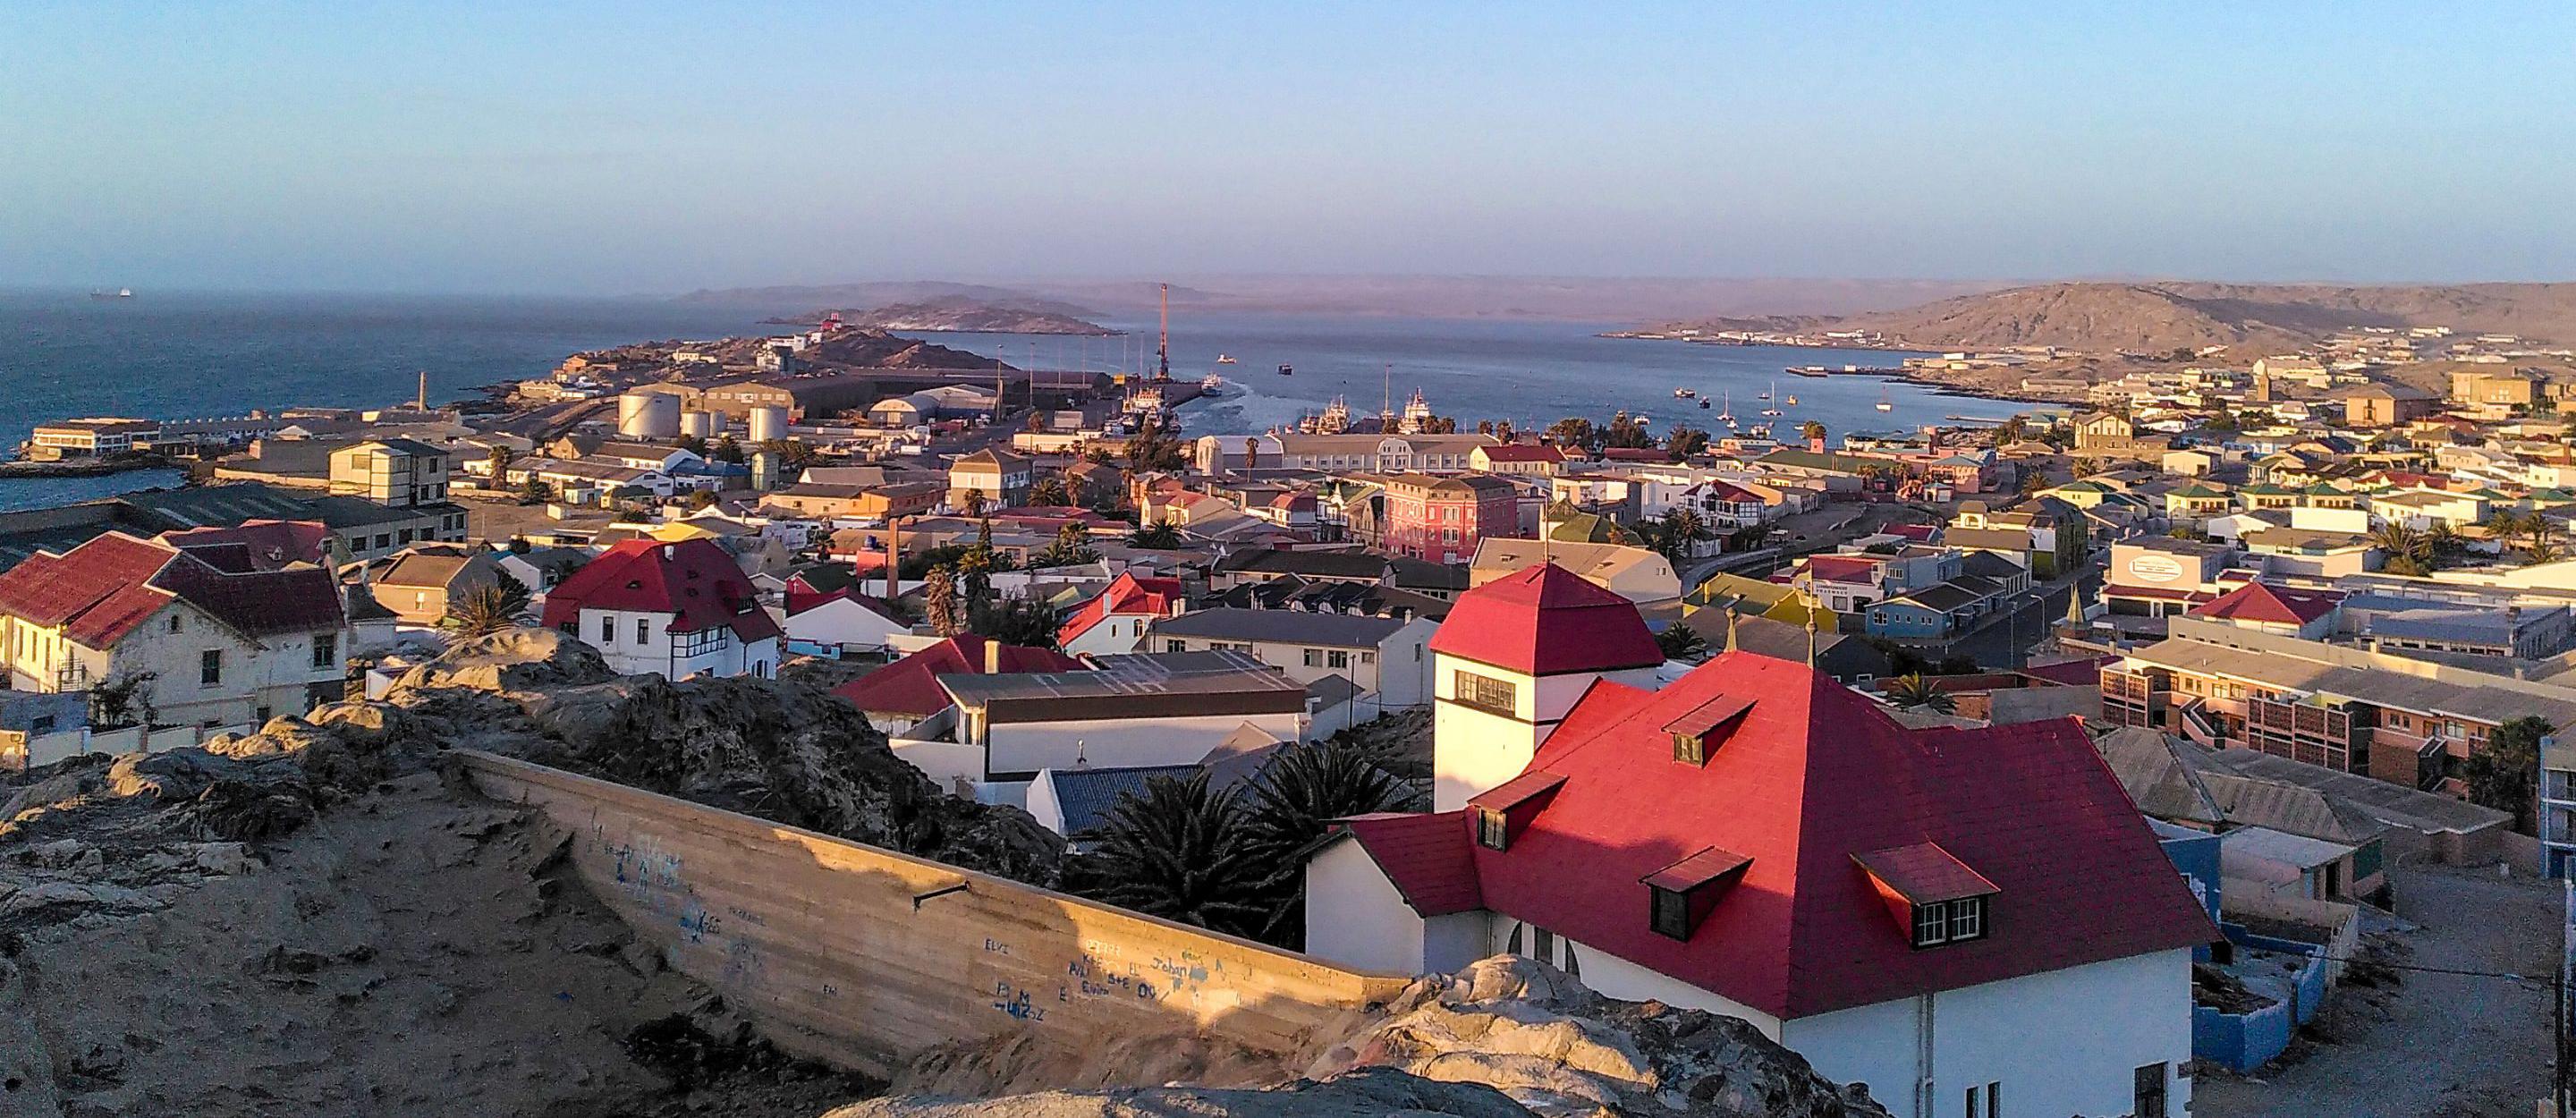 Überblick über Lüderitz